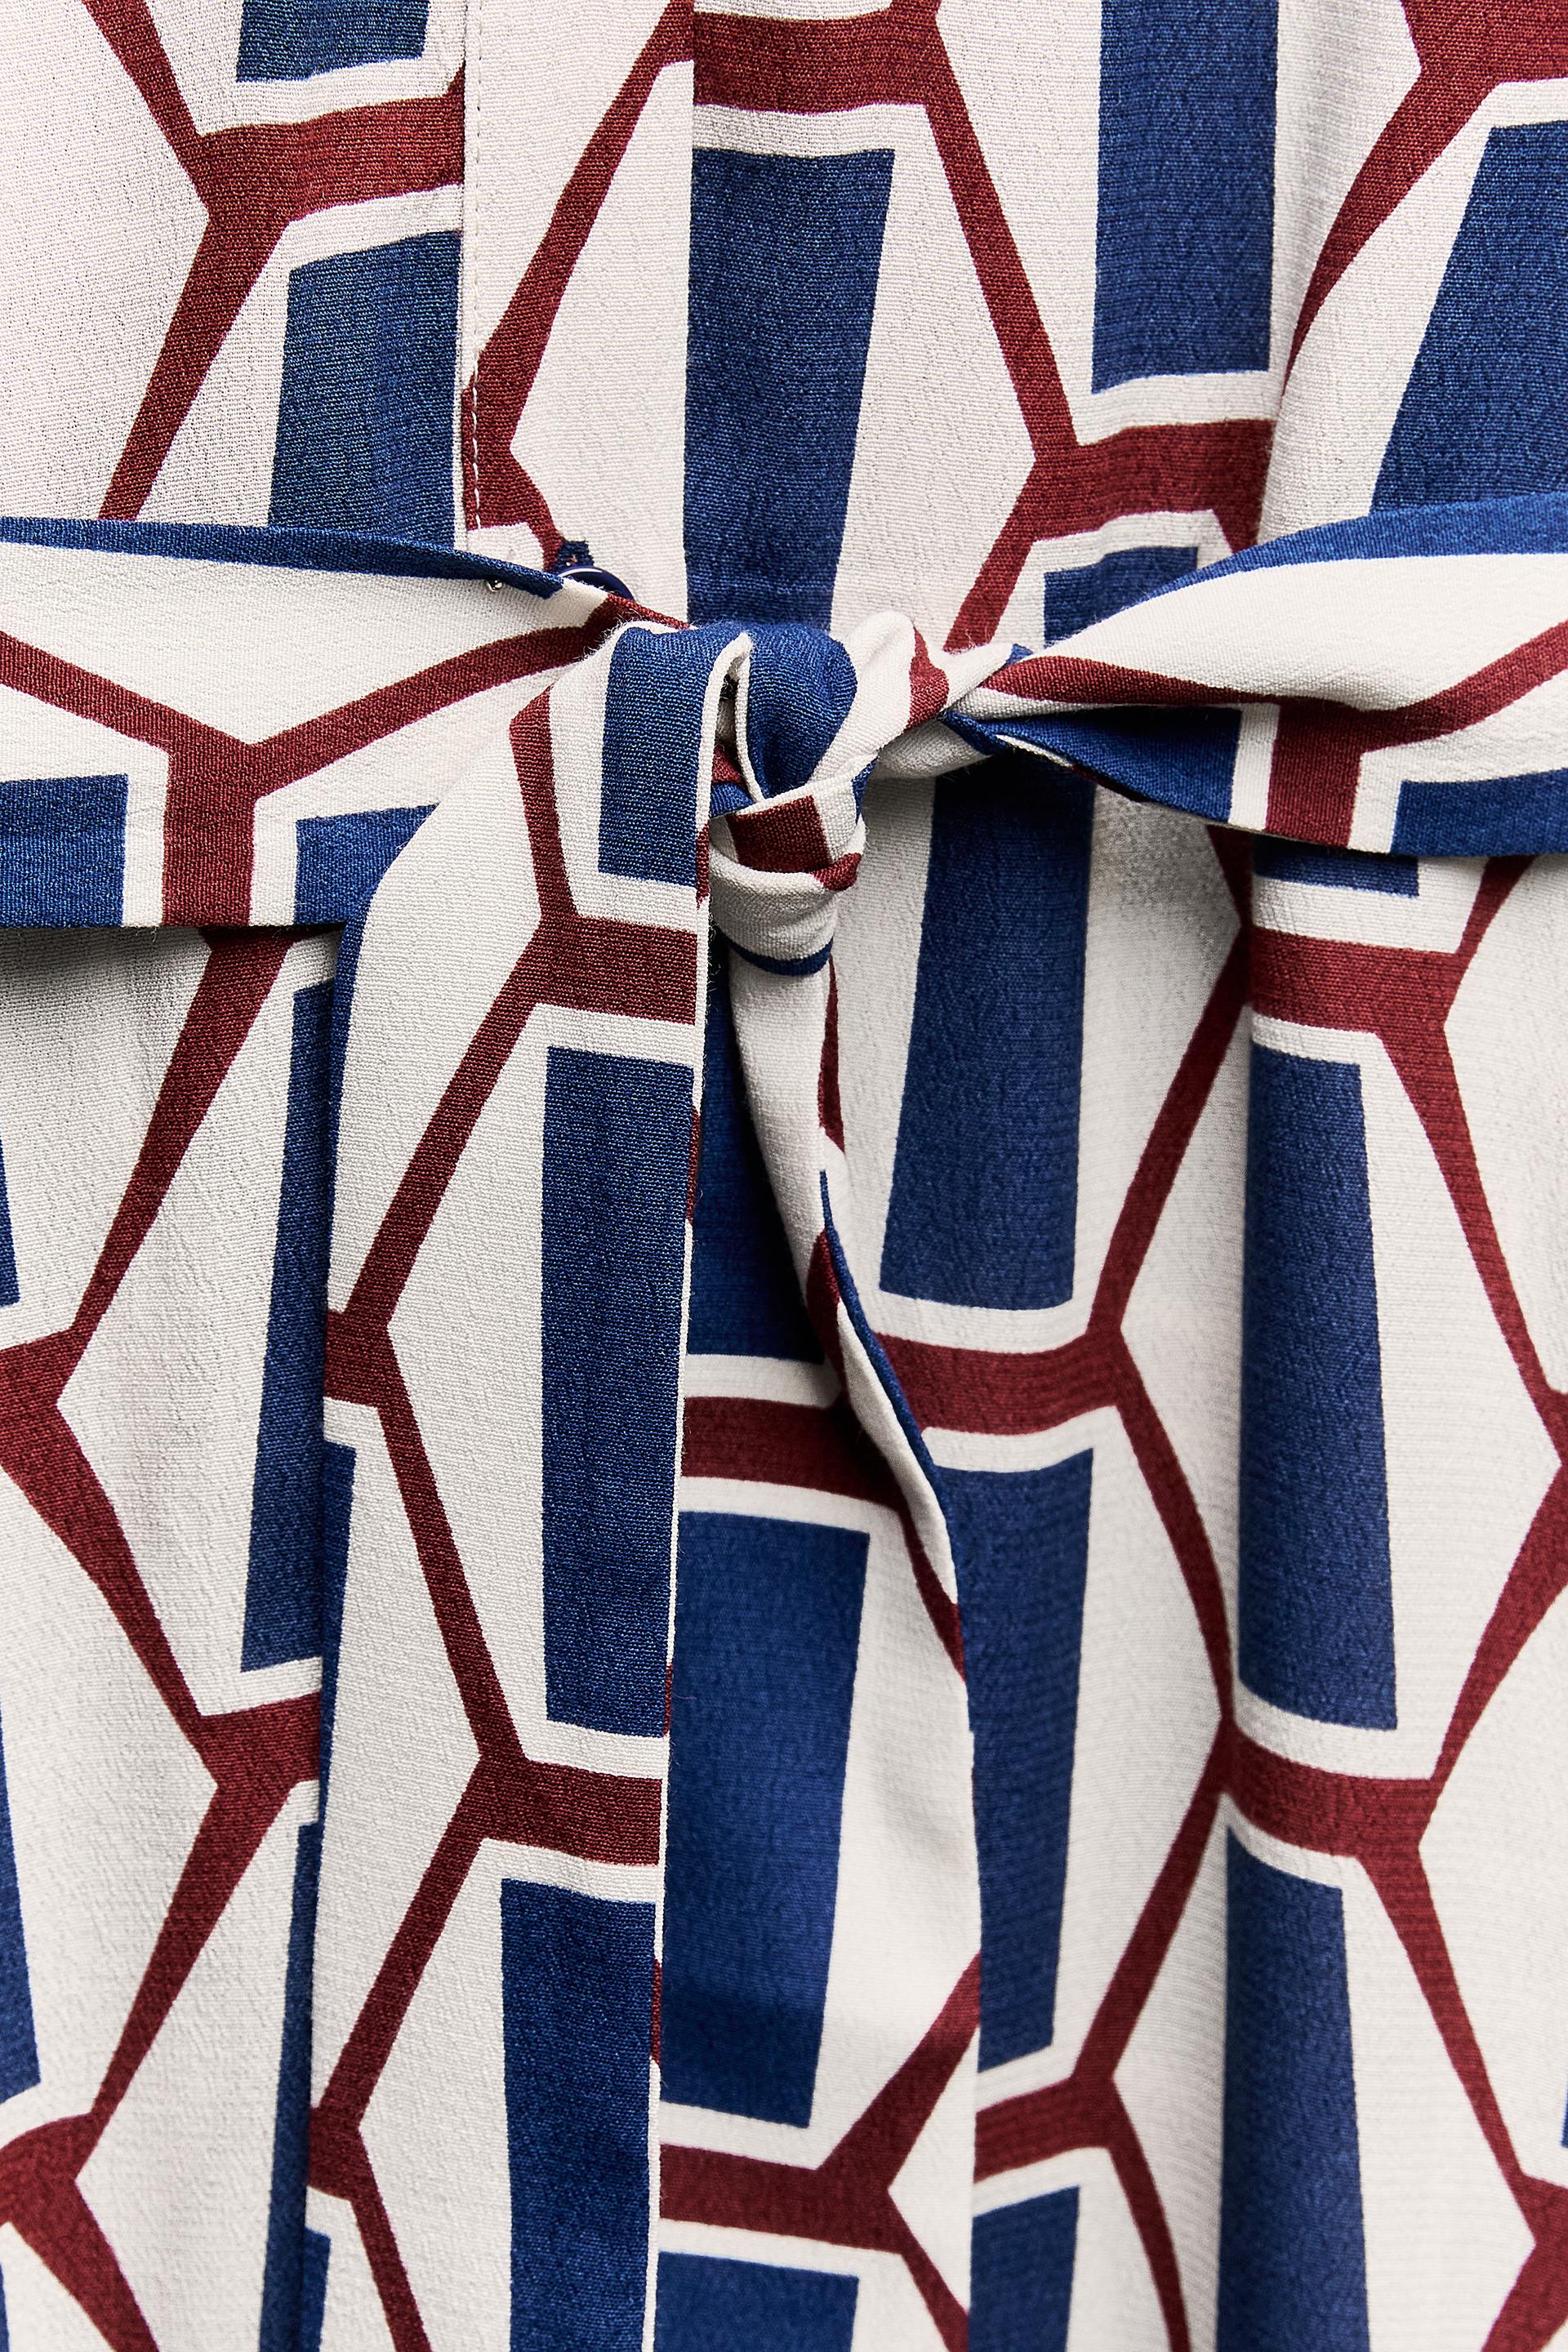 New Zara geometric print shirt.  Clothes design, Printed shirts, Outfits